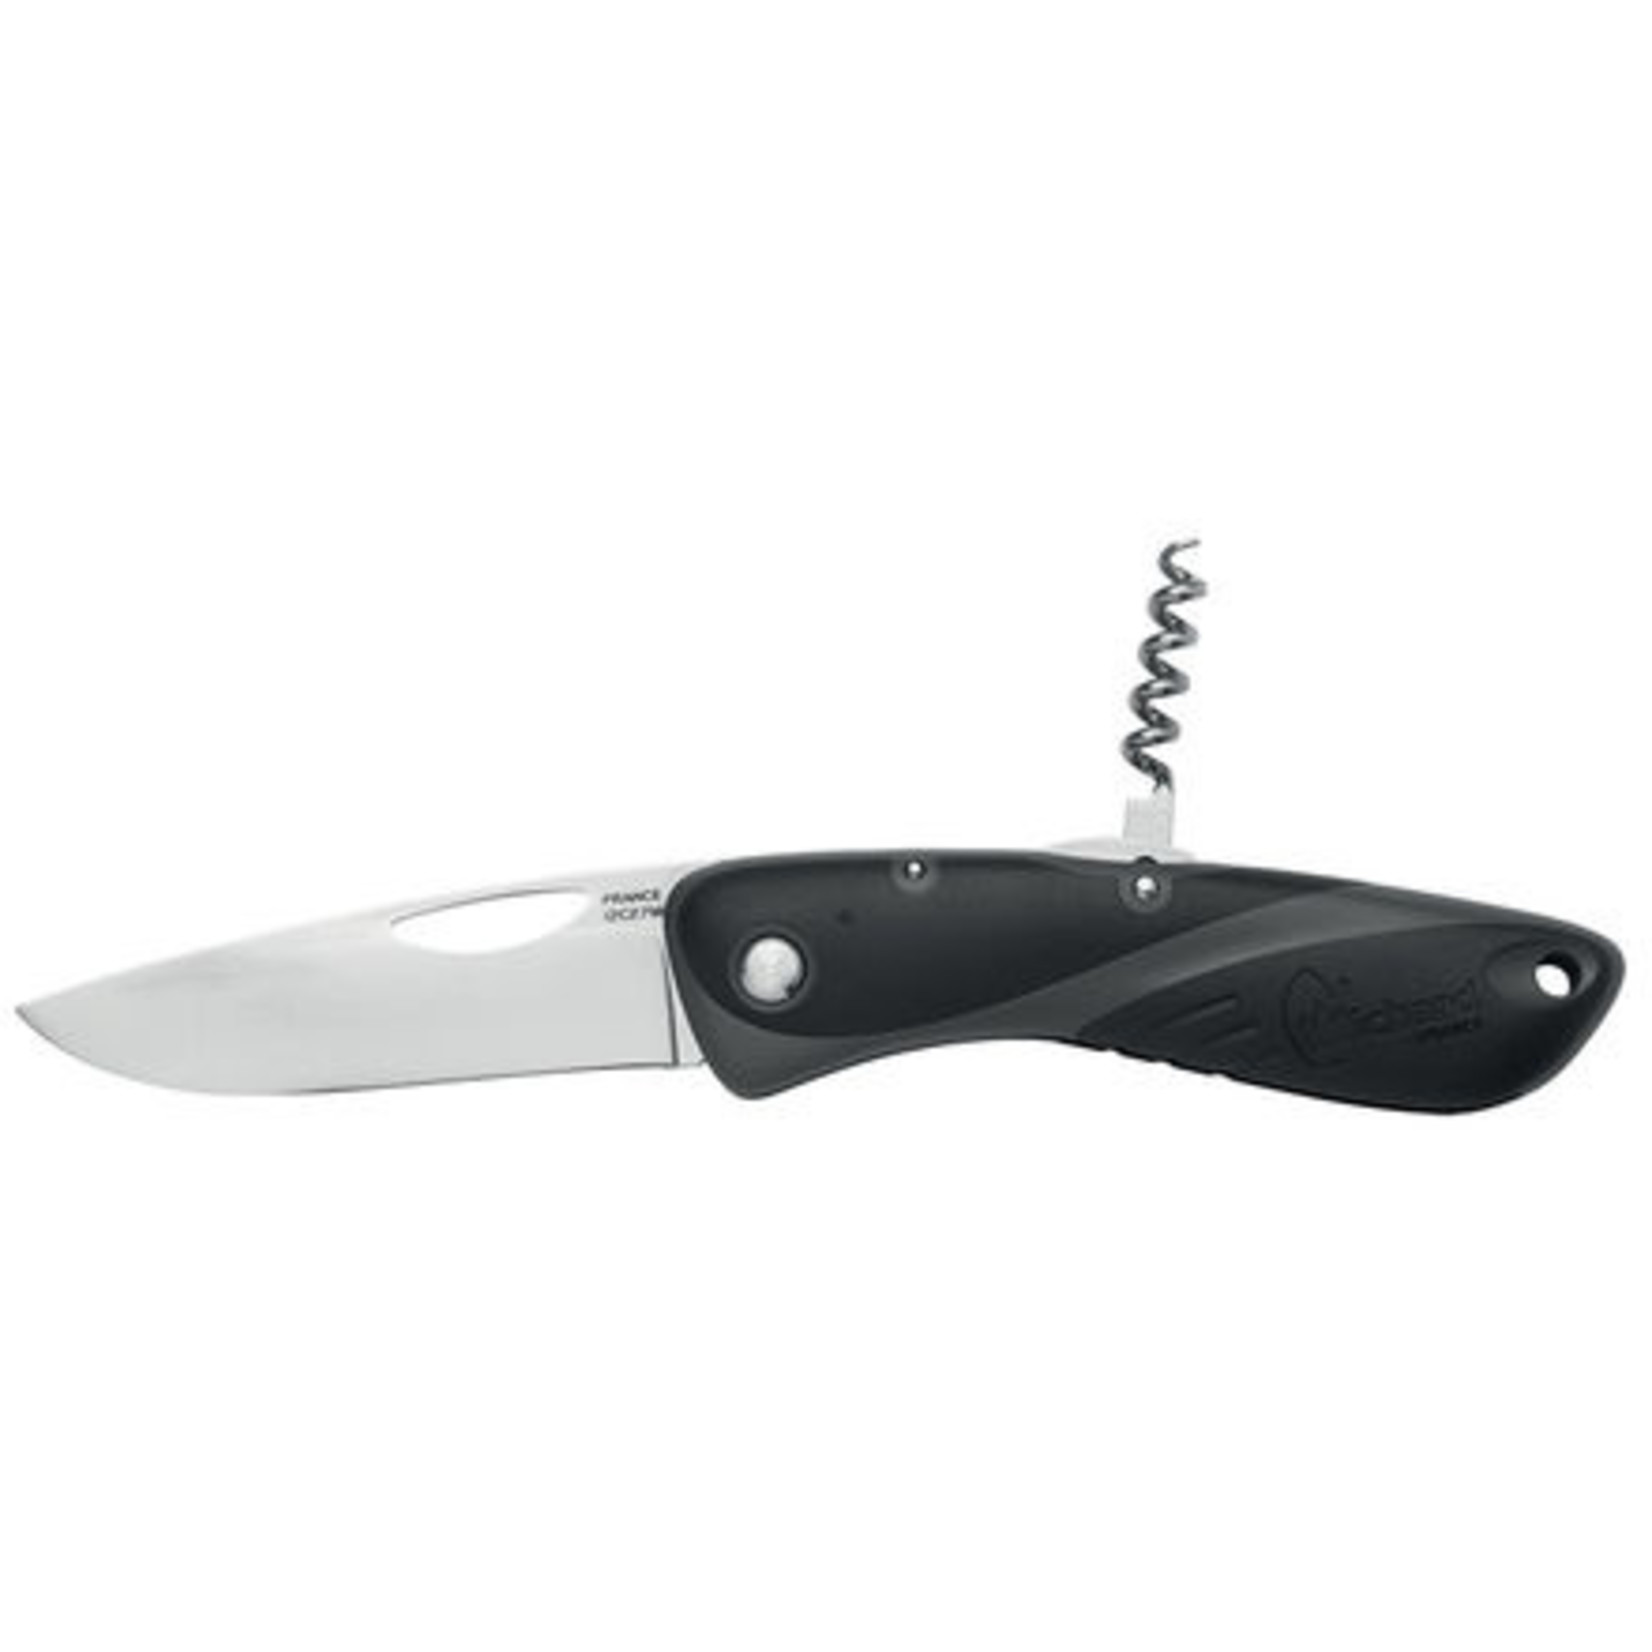 Wichard Hunting Fishing Aquaterra knife - Plain blade & corkscrew - Black